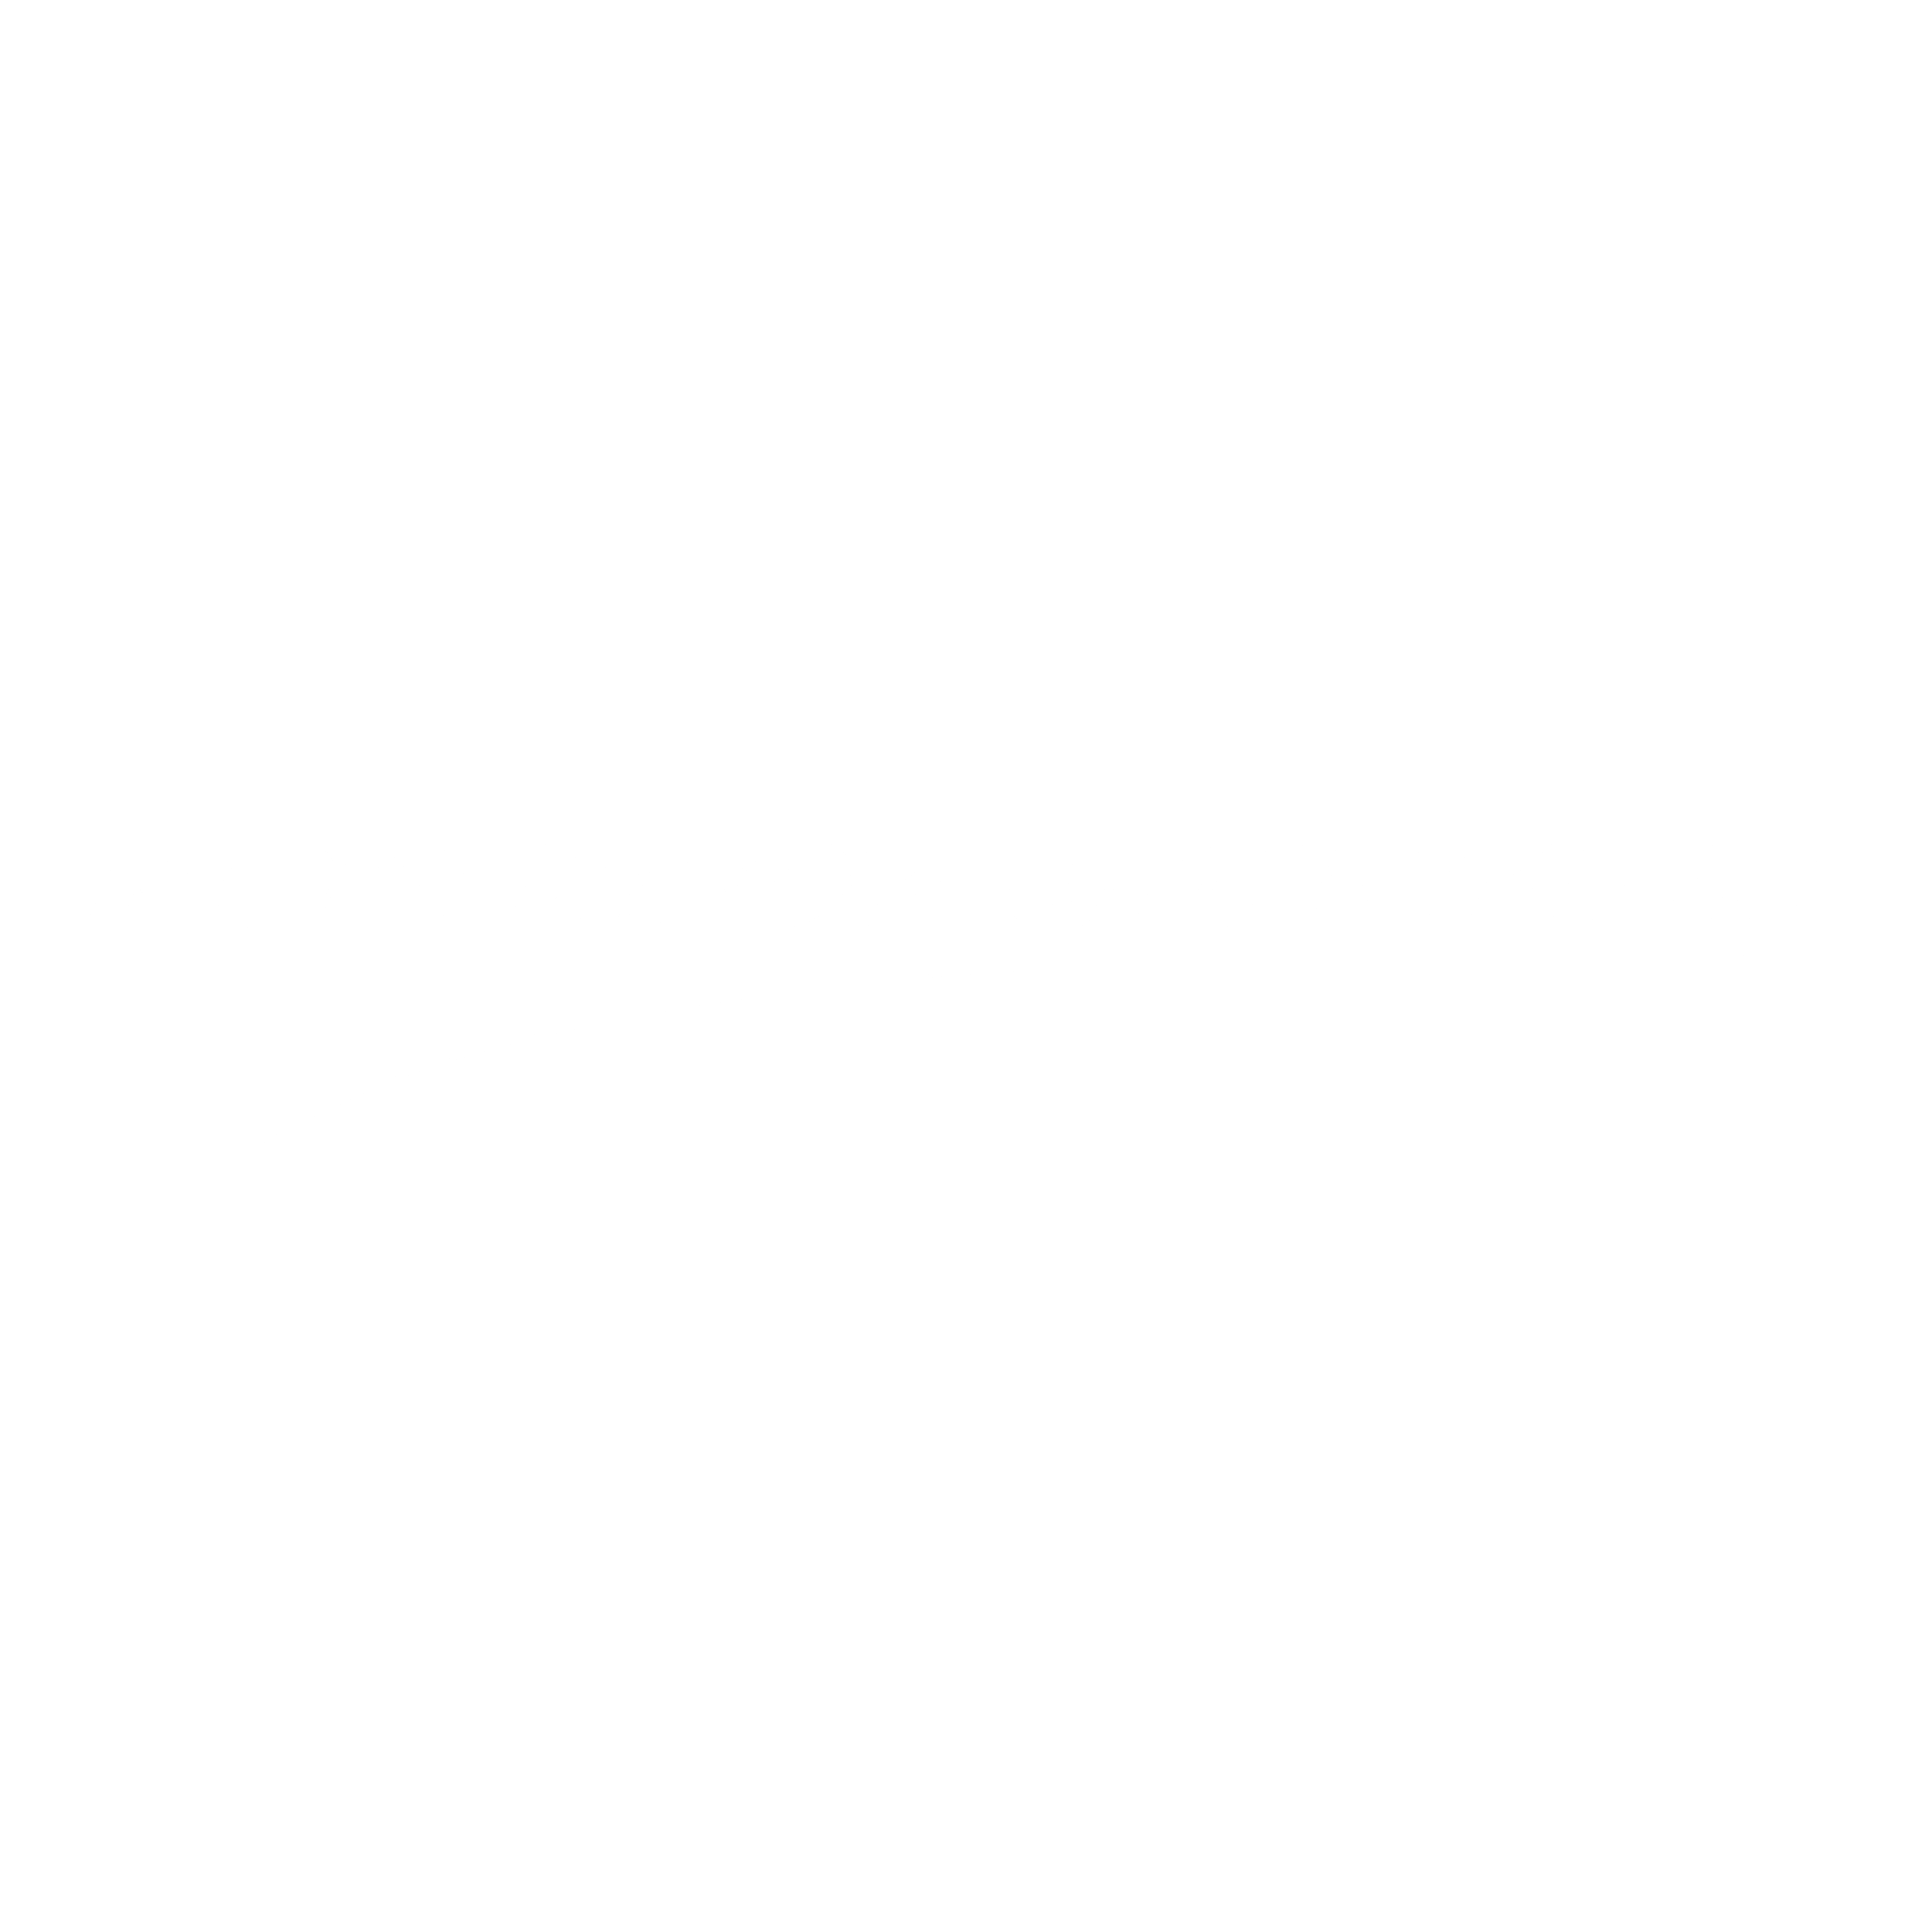 Northrop Grumman Logo PNG Transparent & SVG Vector.